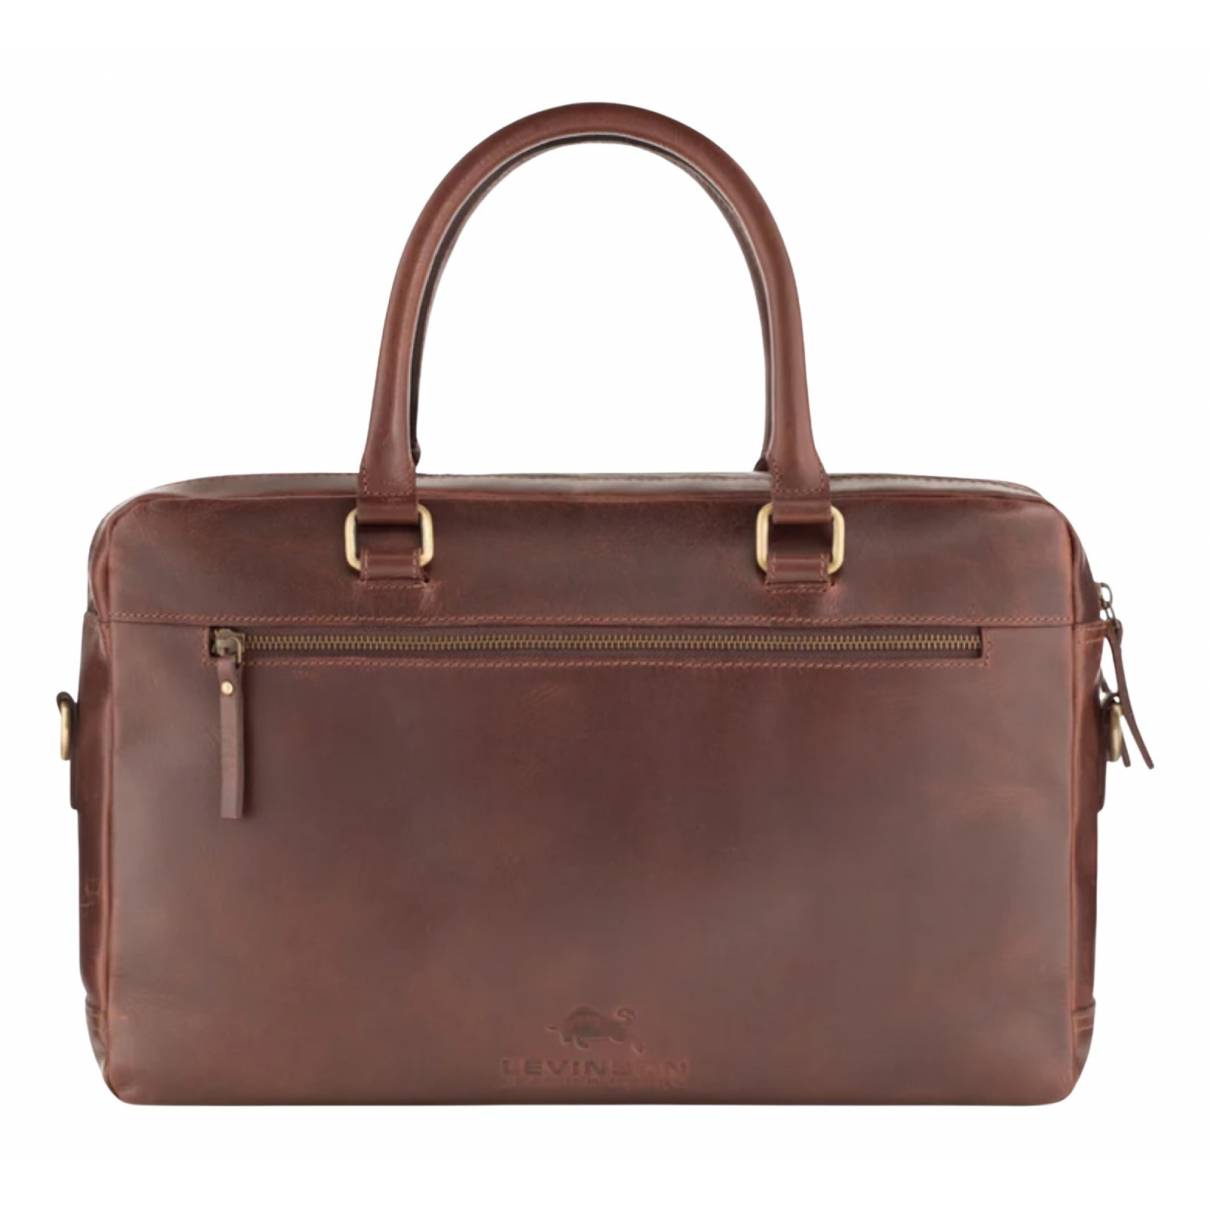 Leather handbag Levinson